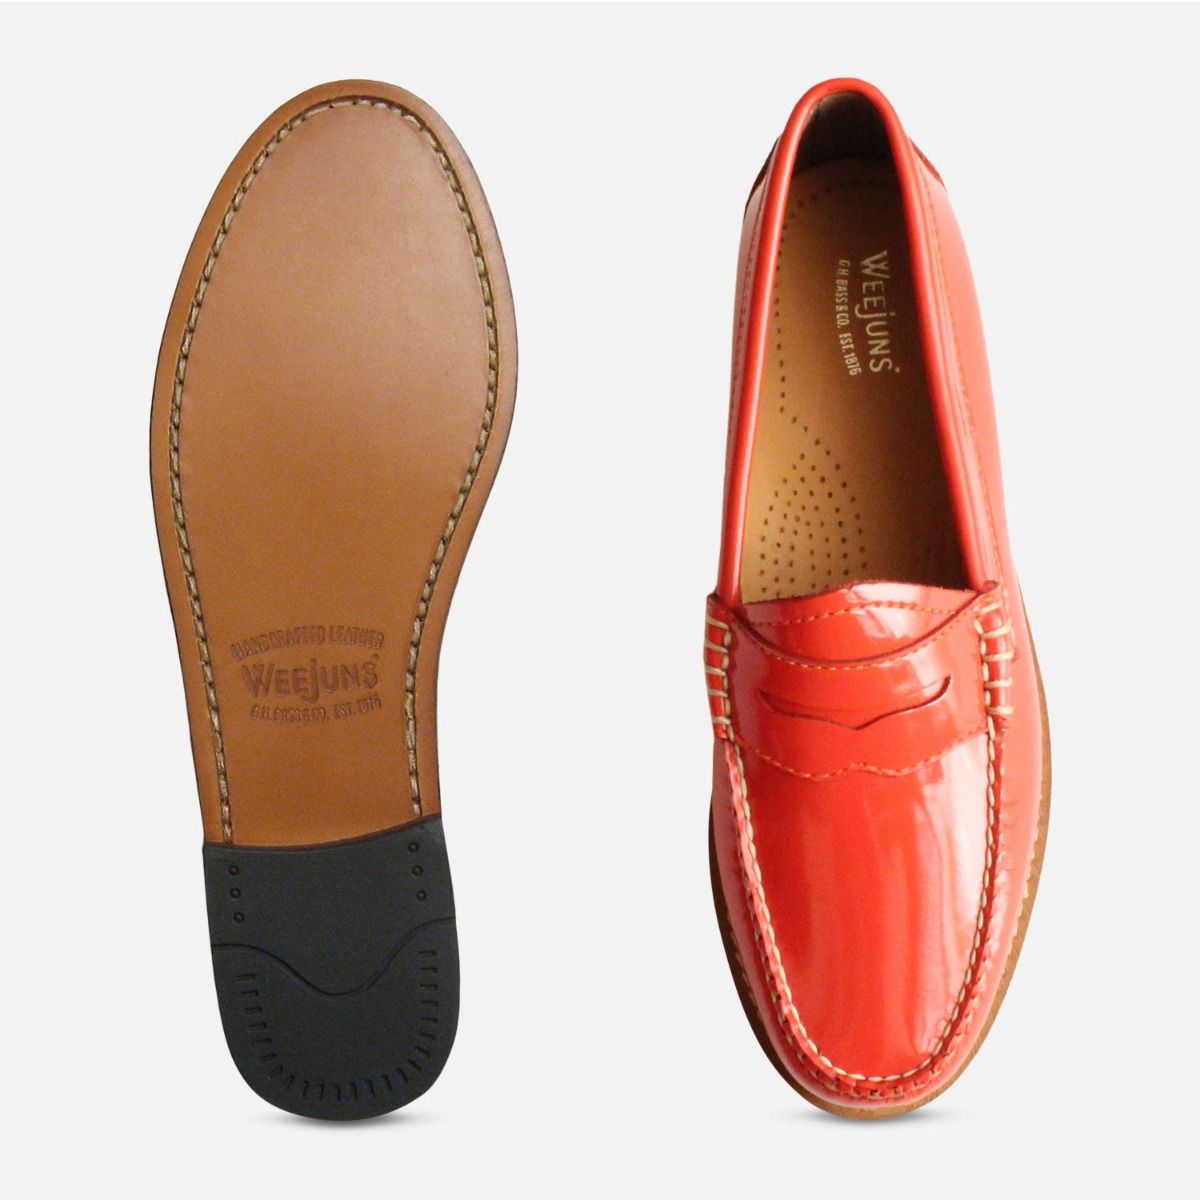 orange patent leather shoes